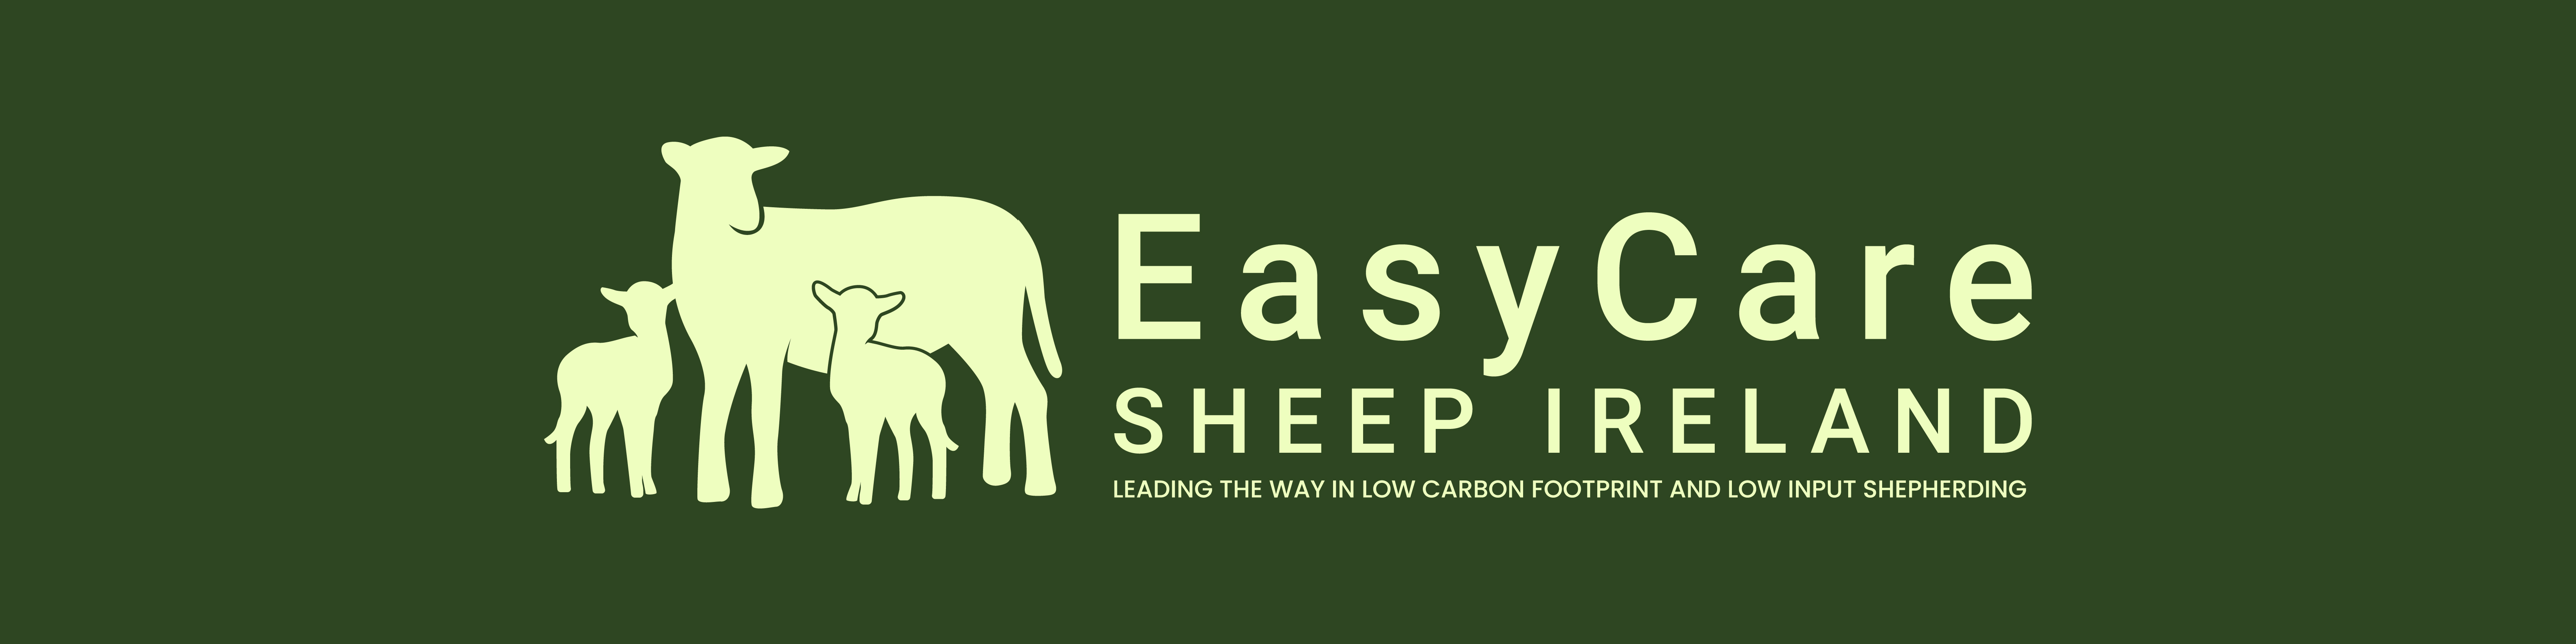 Easy Care Sheep Ireland logo